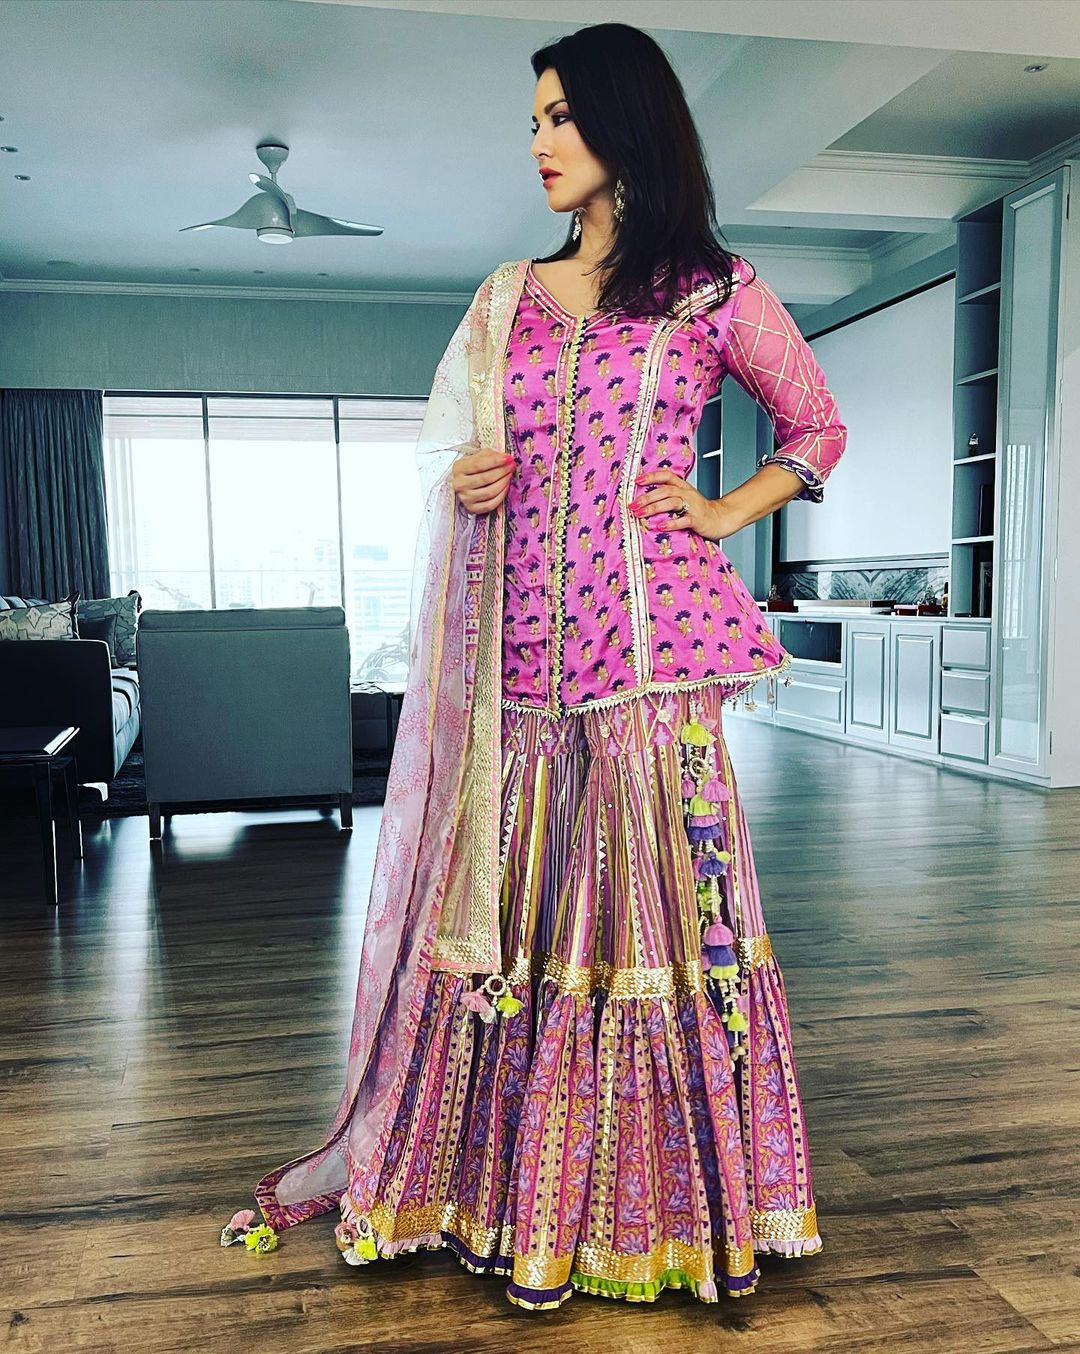 Sunny Leone in Ethnic Dress